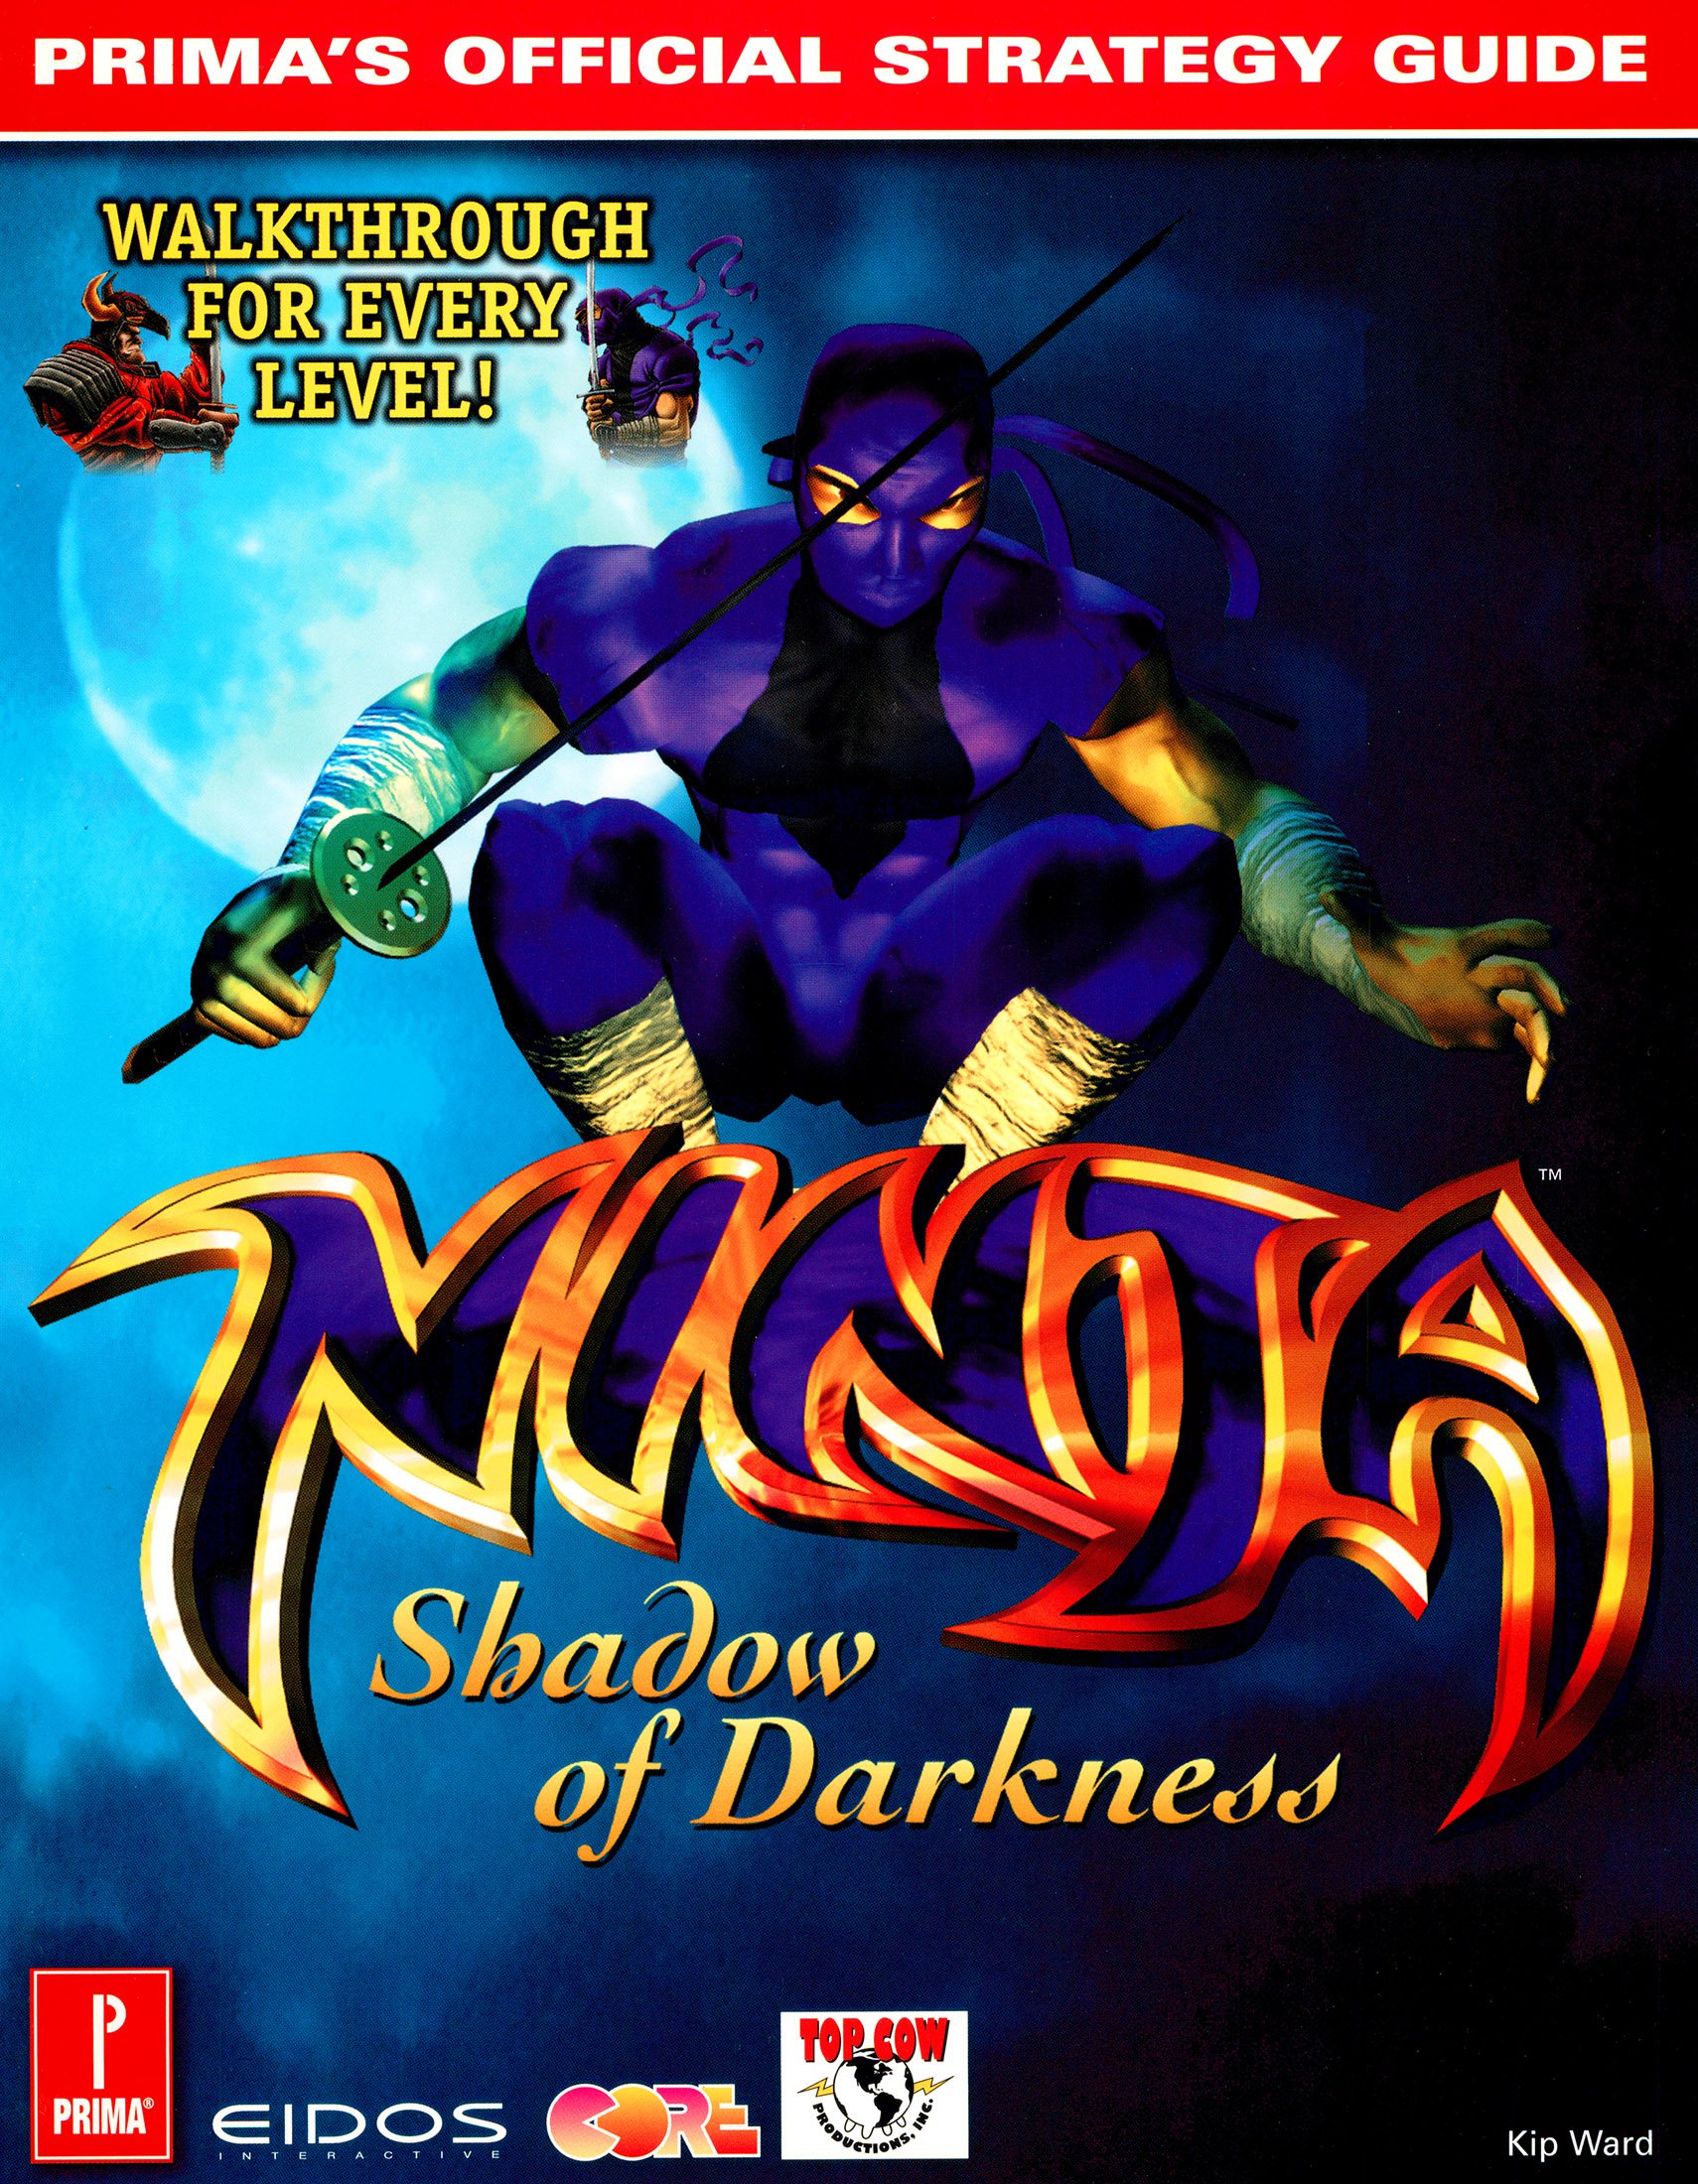 Ninja: Shadow of Darkness - release date, videos, screenshots, reviews on  RAWG